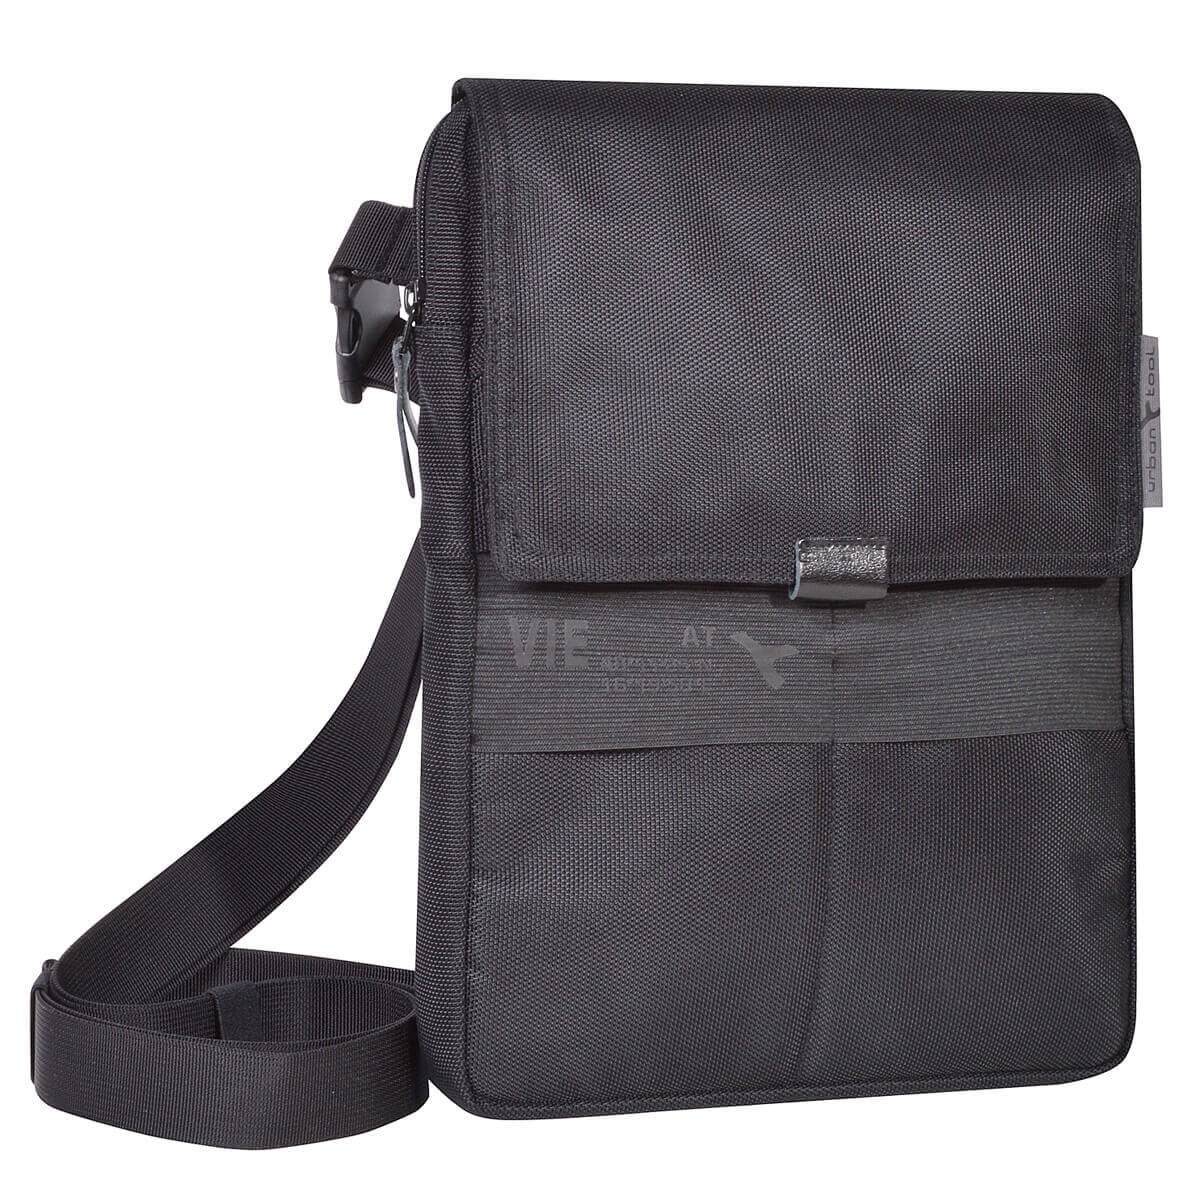 FANDARE Fashion Sling Bag 10.5 Inch iPad Man Student Outdoor Sport Shoulder Crossbody Bag Large Capacity Wear-Resistant Canvas Black 